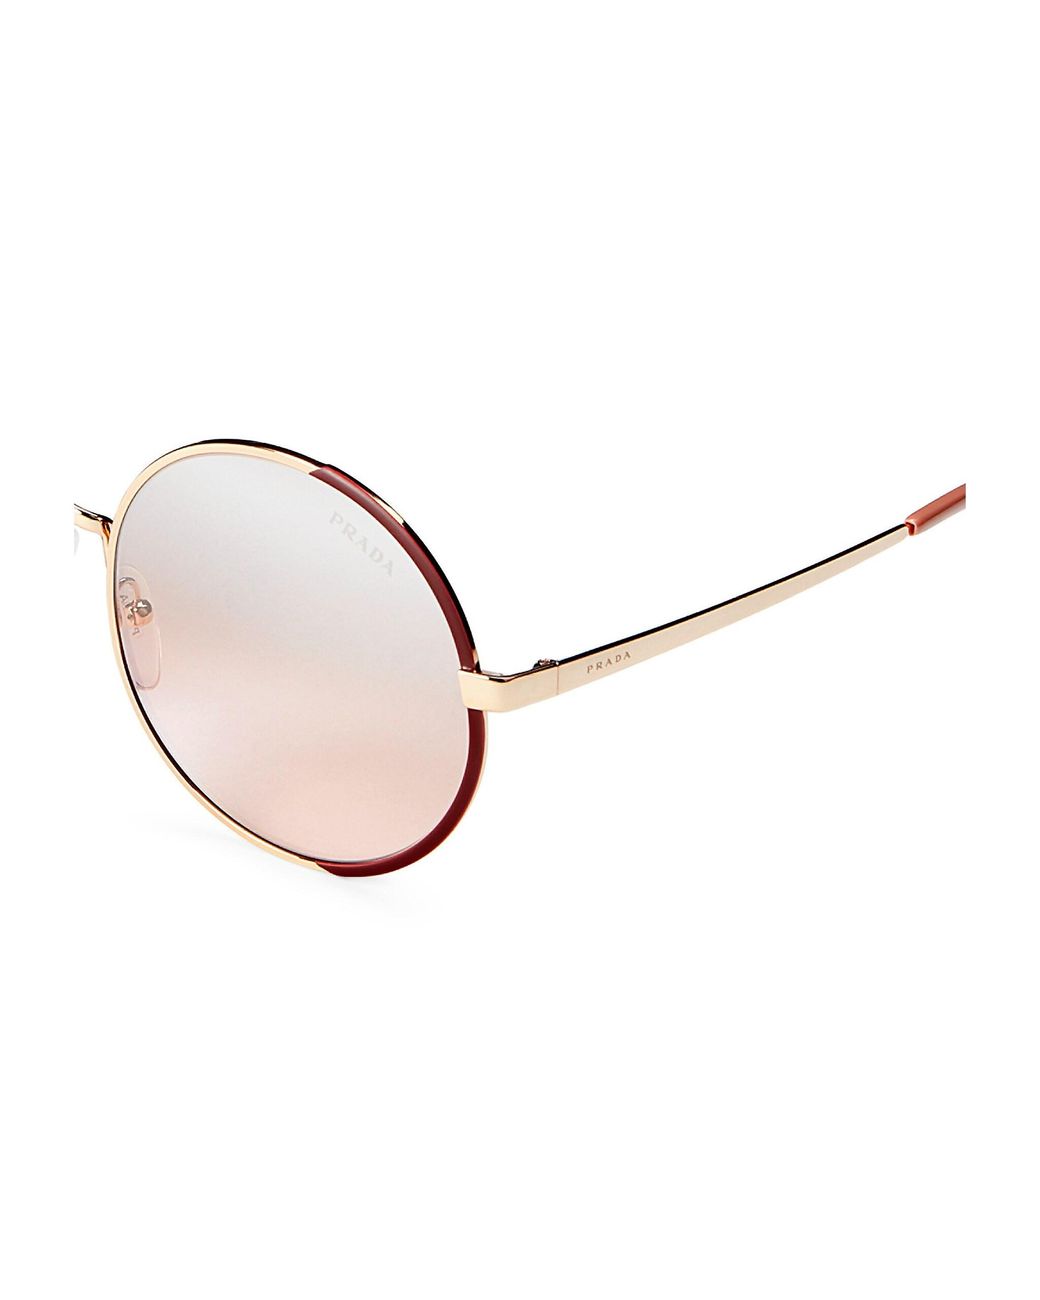 Prada 57mm Round Sunglasses in Gold Pink (Pink) | Lyst